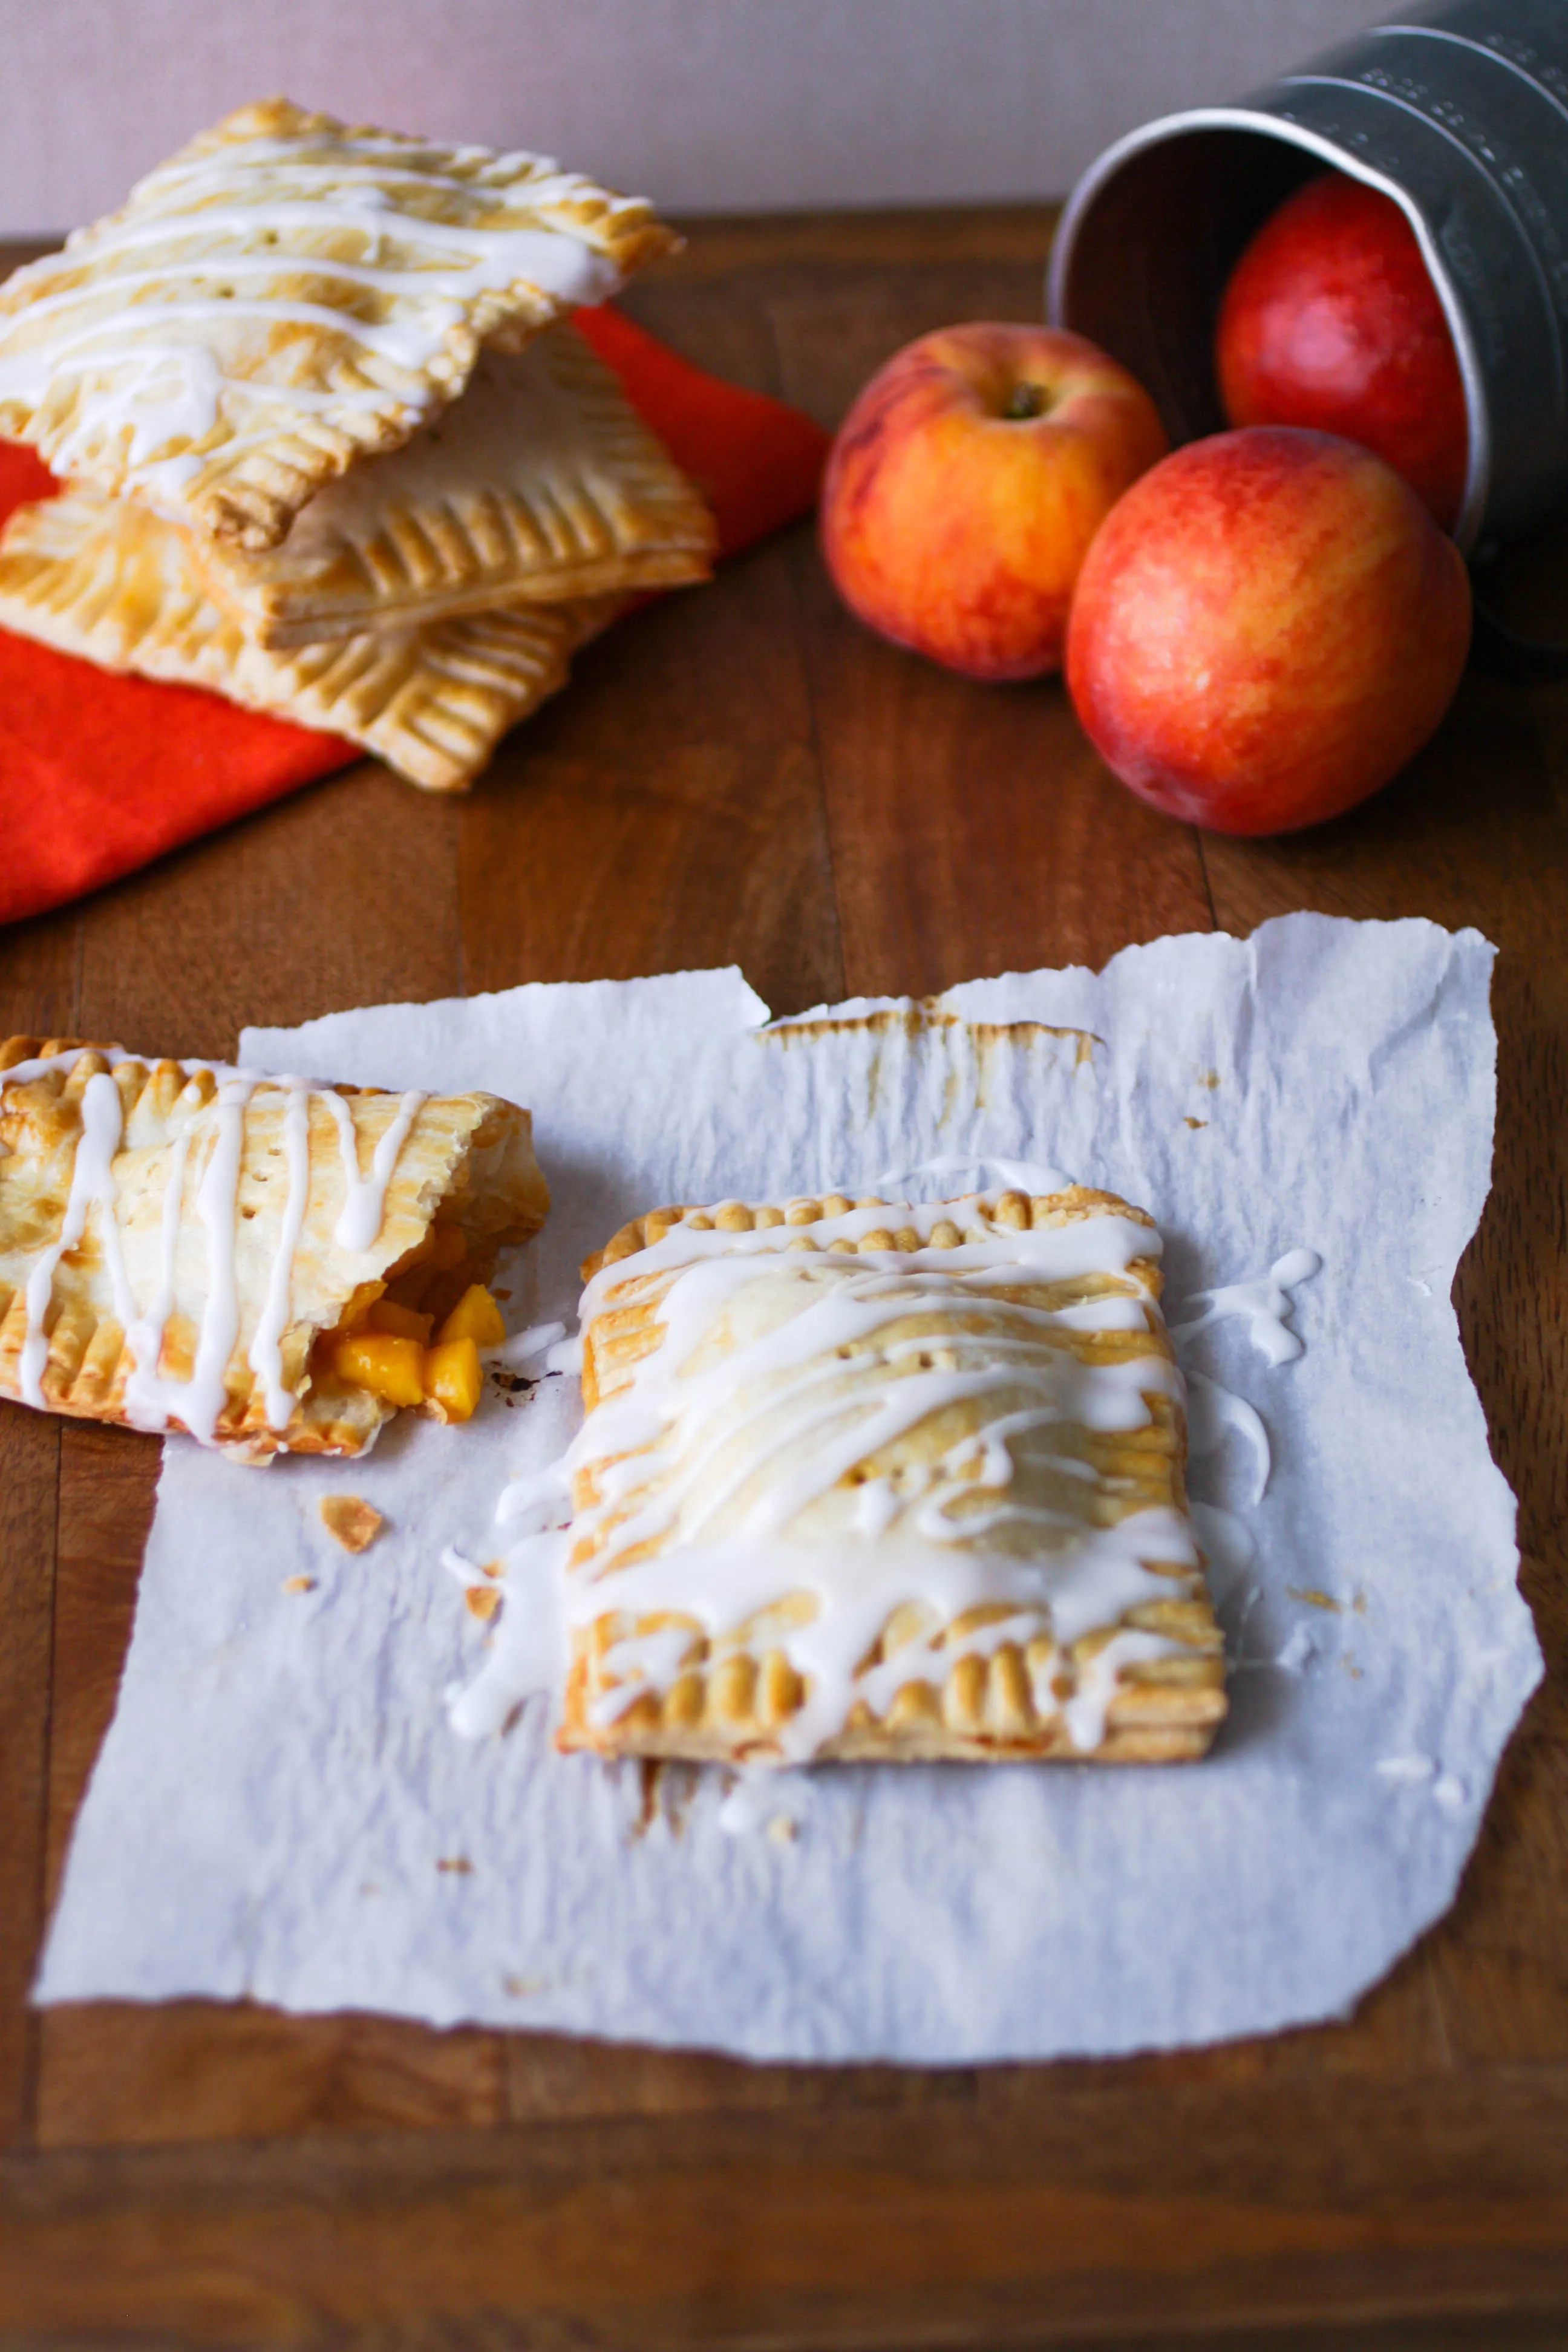 Fresh Peach Pie “Pop Tarts” will make you smile! These wonderful, homemade treats are amazing!